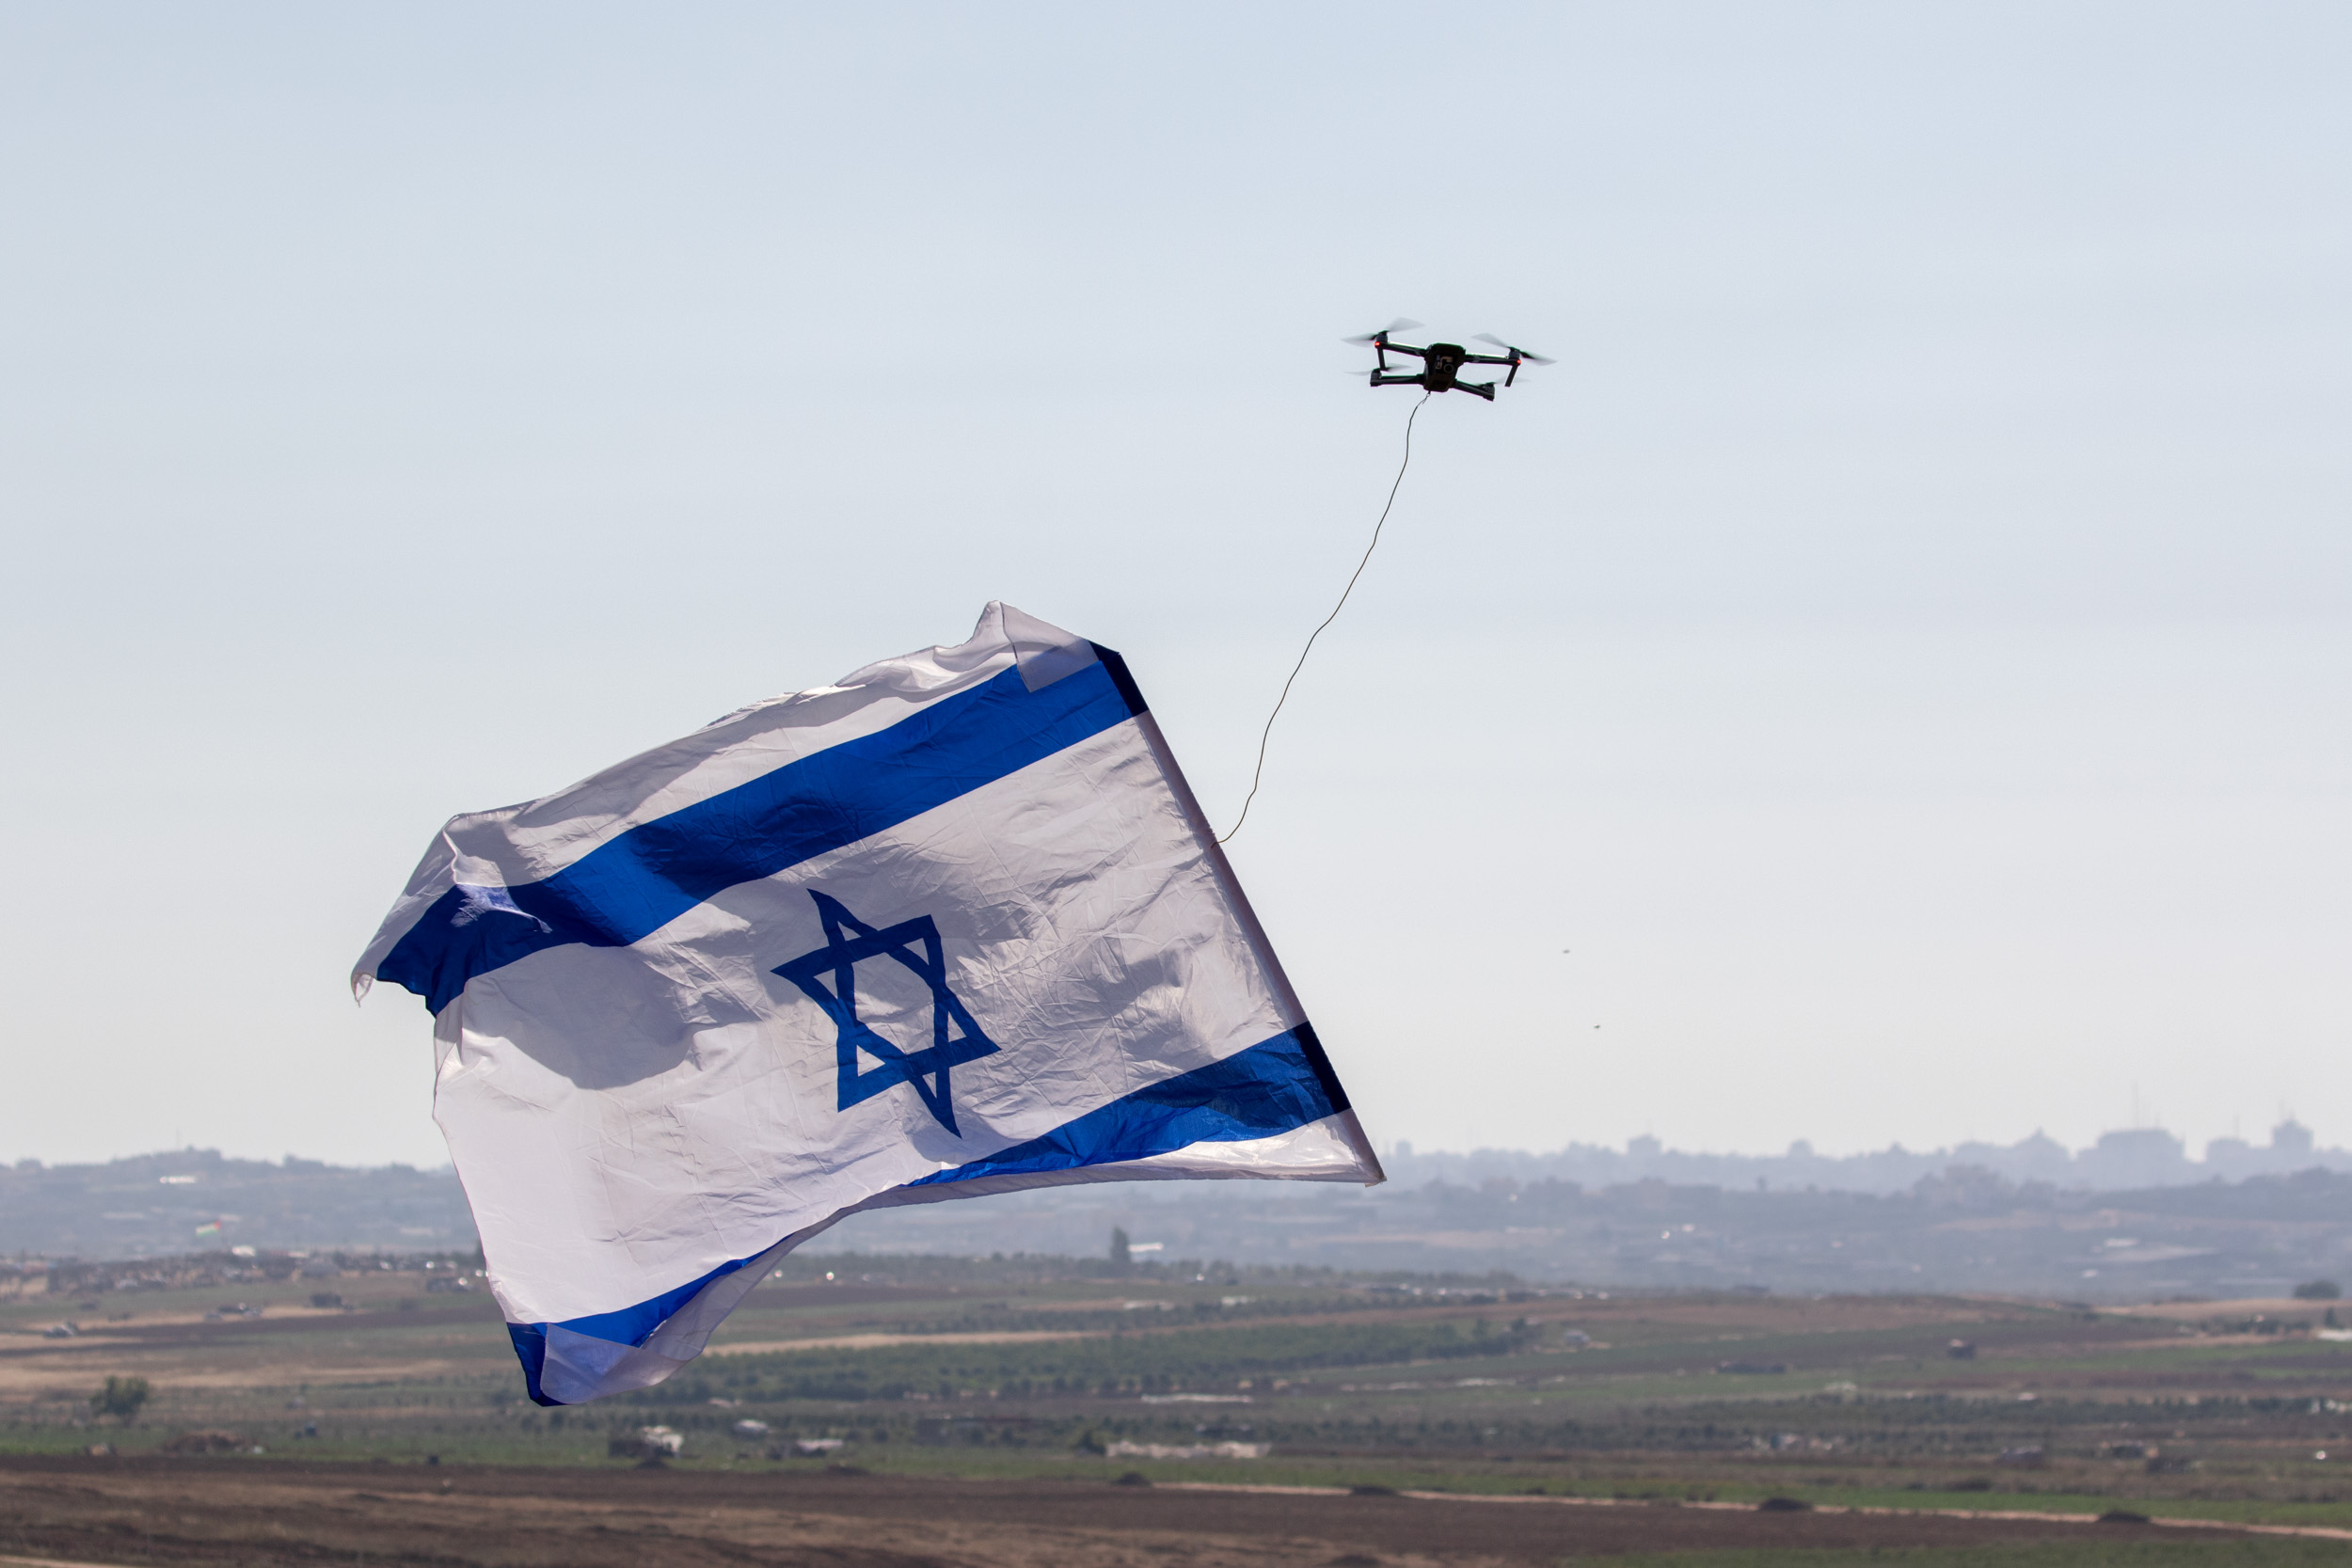 Northern Gaza Border, June 2018 - Small drone carries the israeli flag, sent by Israelis leaving near the gaza border 